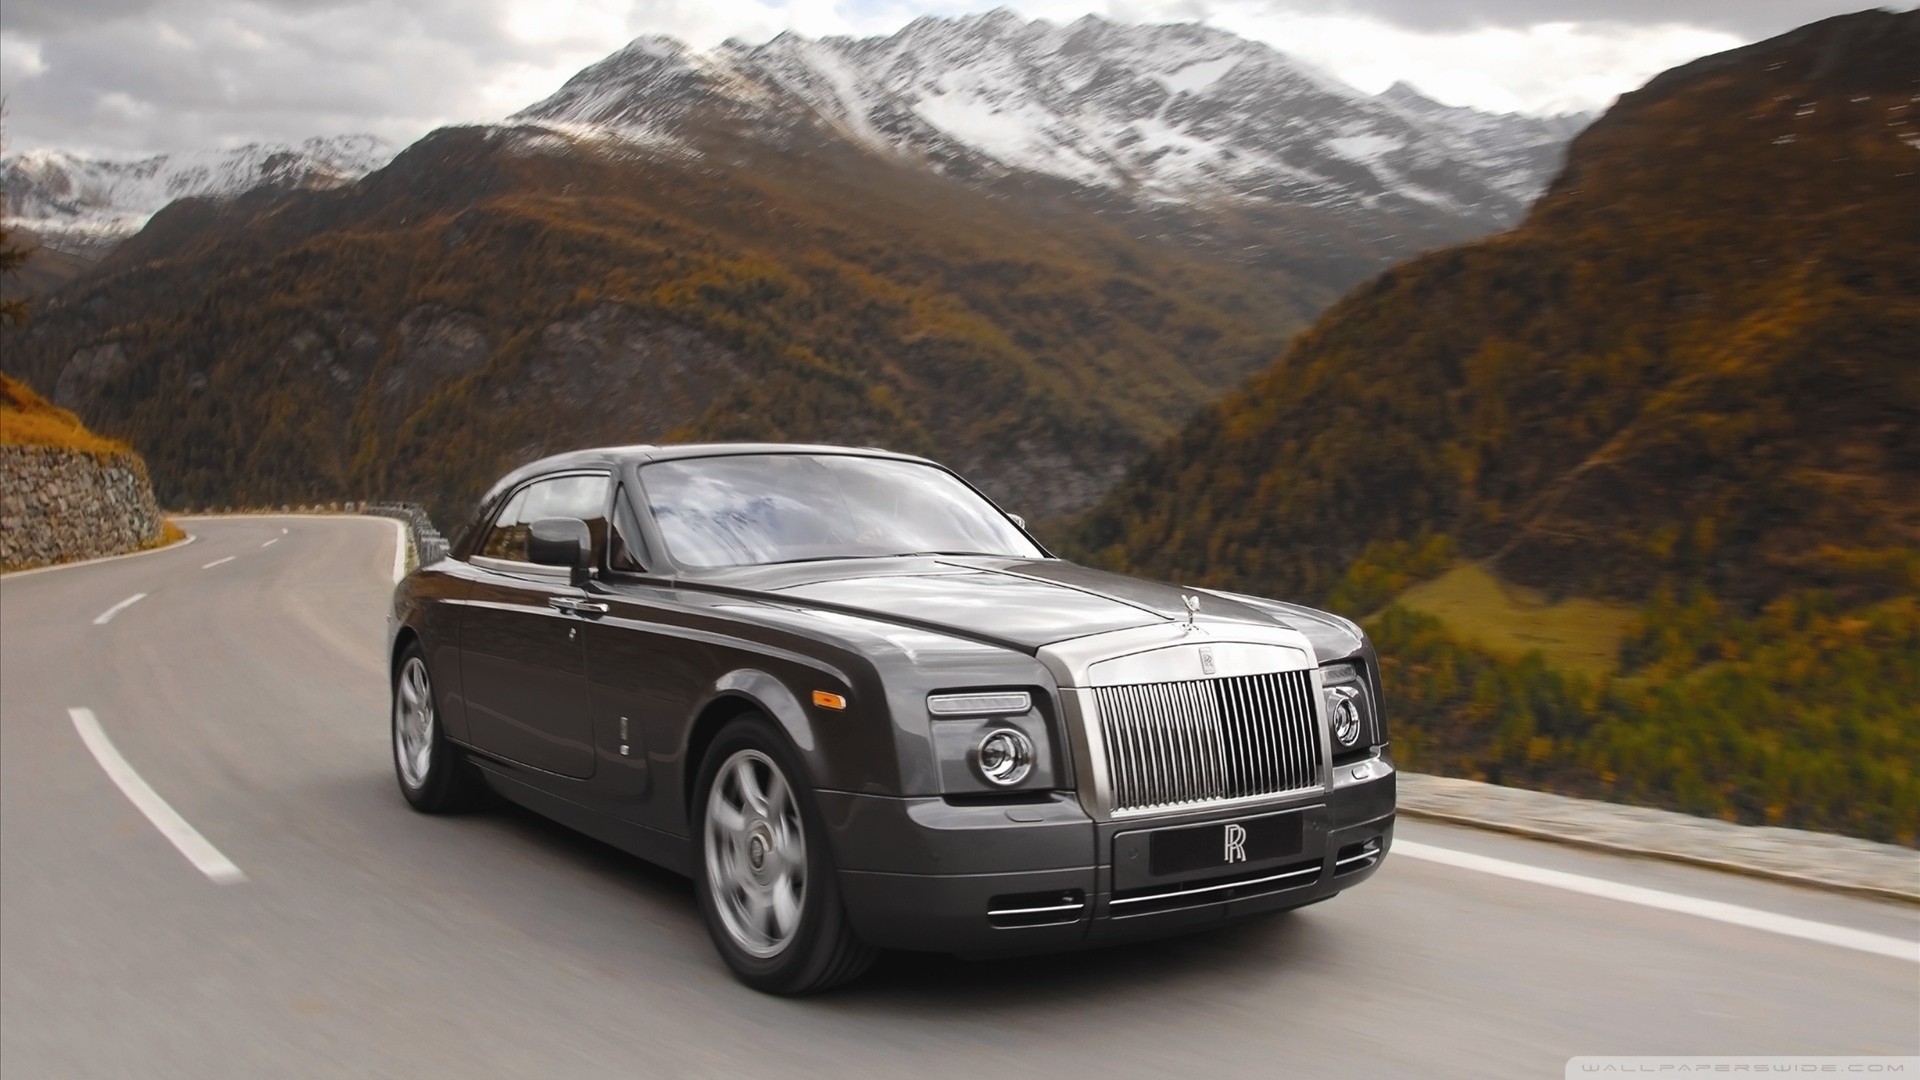 supercars hd wallpapers 1080p download,land vehicle,vehicle,luxury vehicle,car,rolls royce phantom